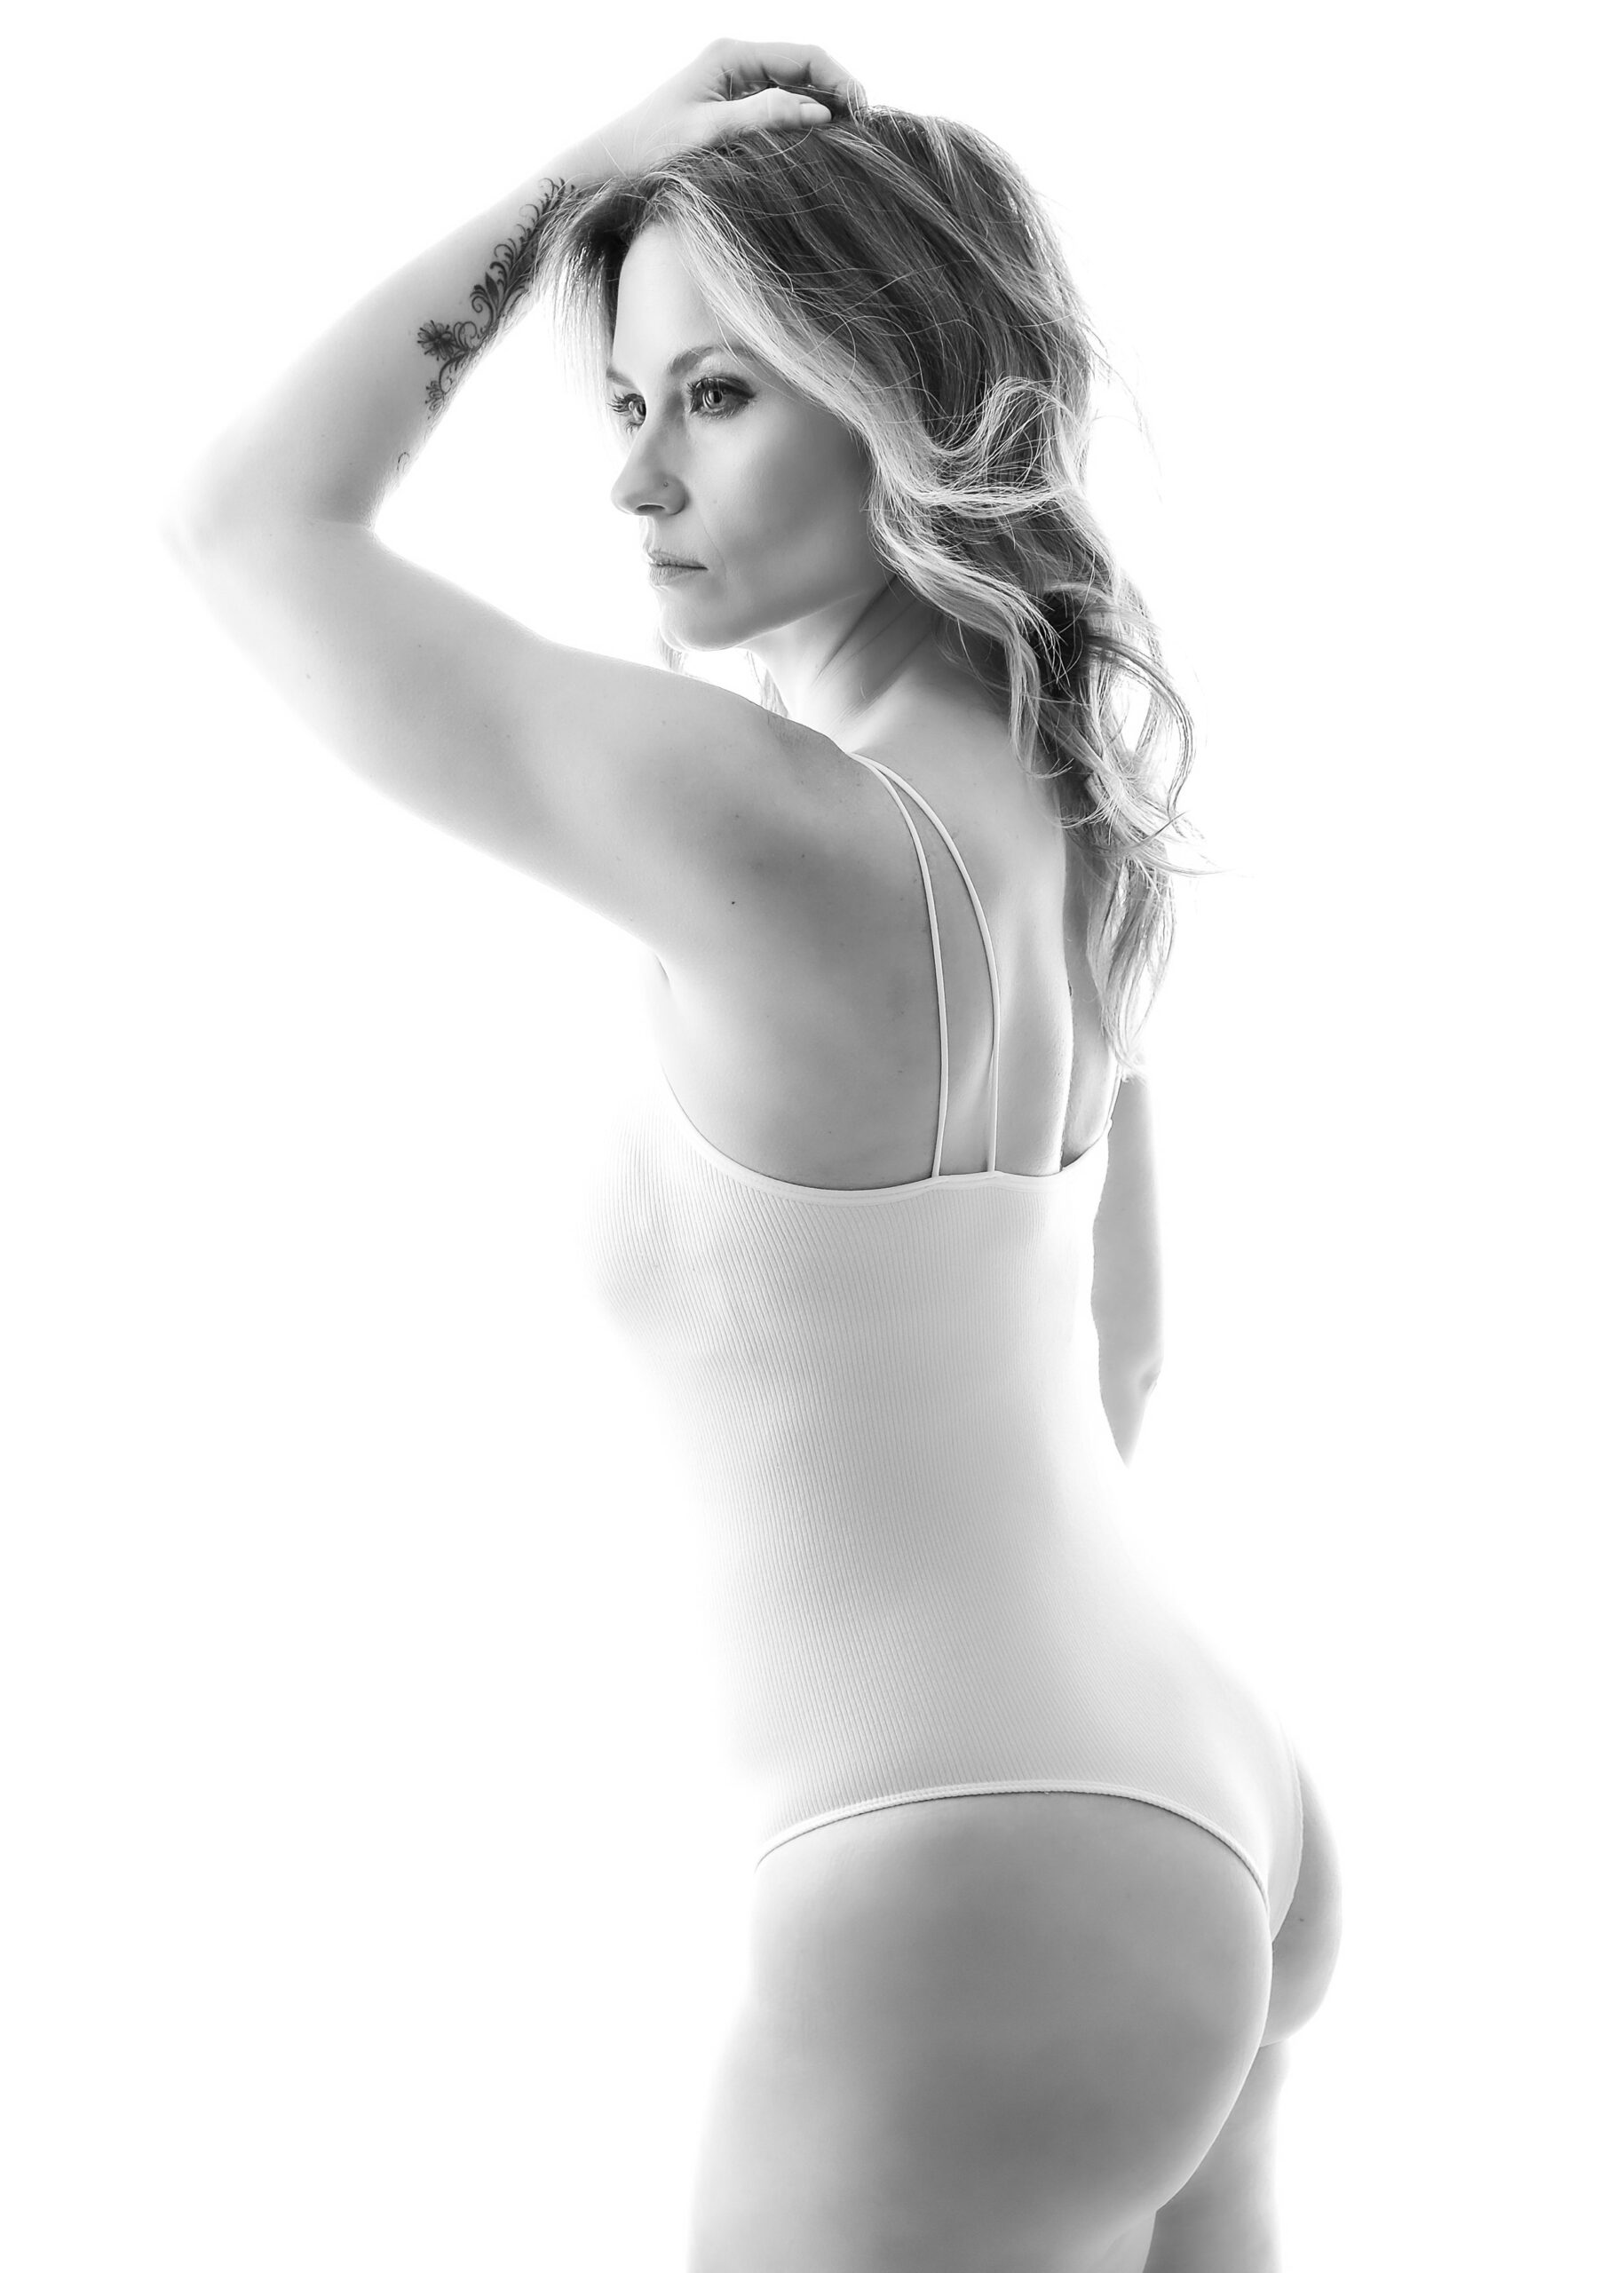 Toronto boudoir photography. A striking woman in a white body suit